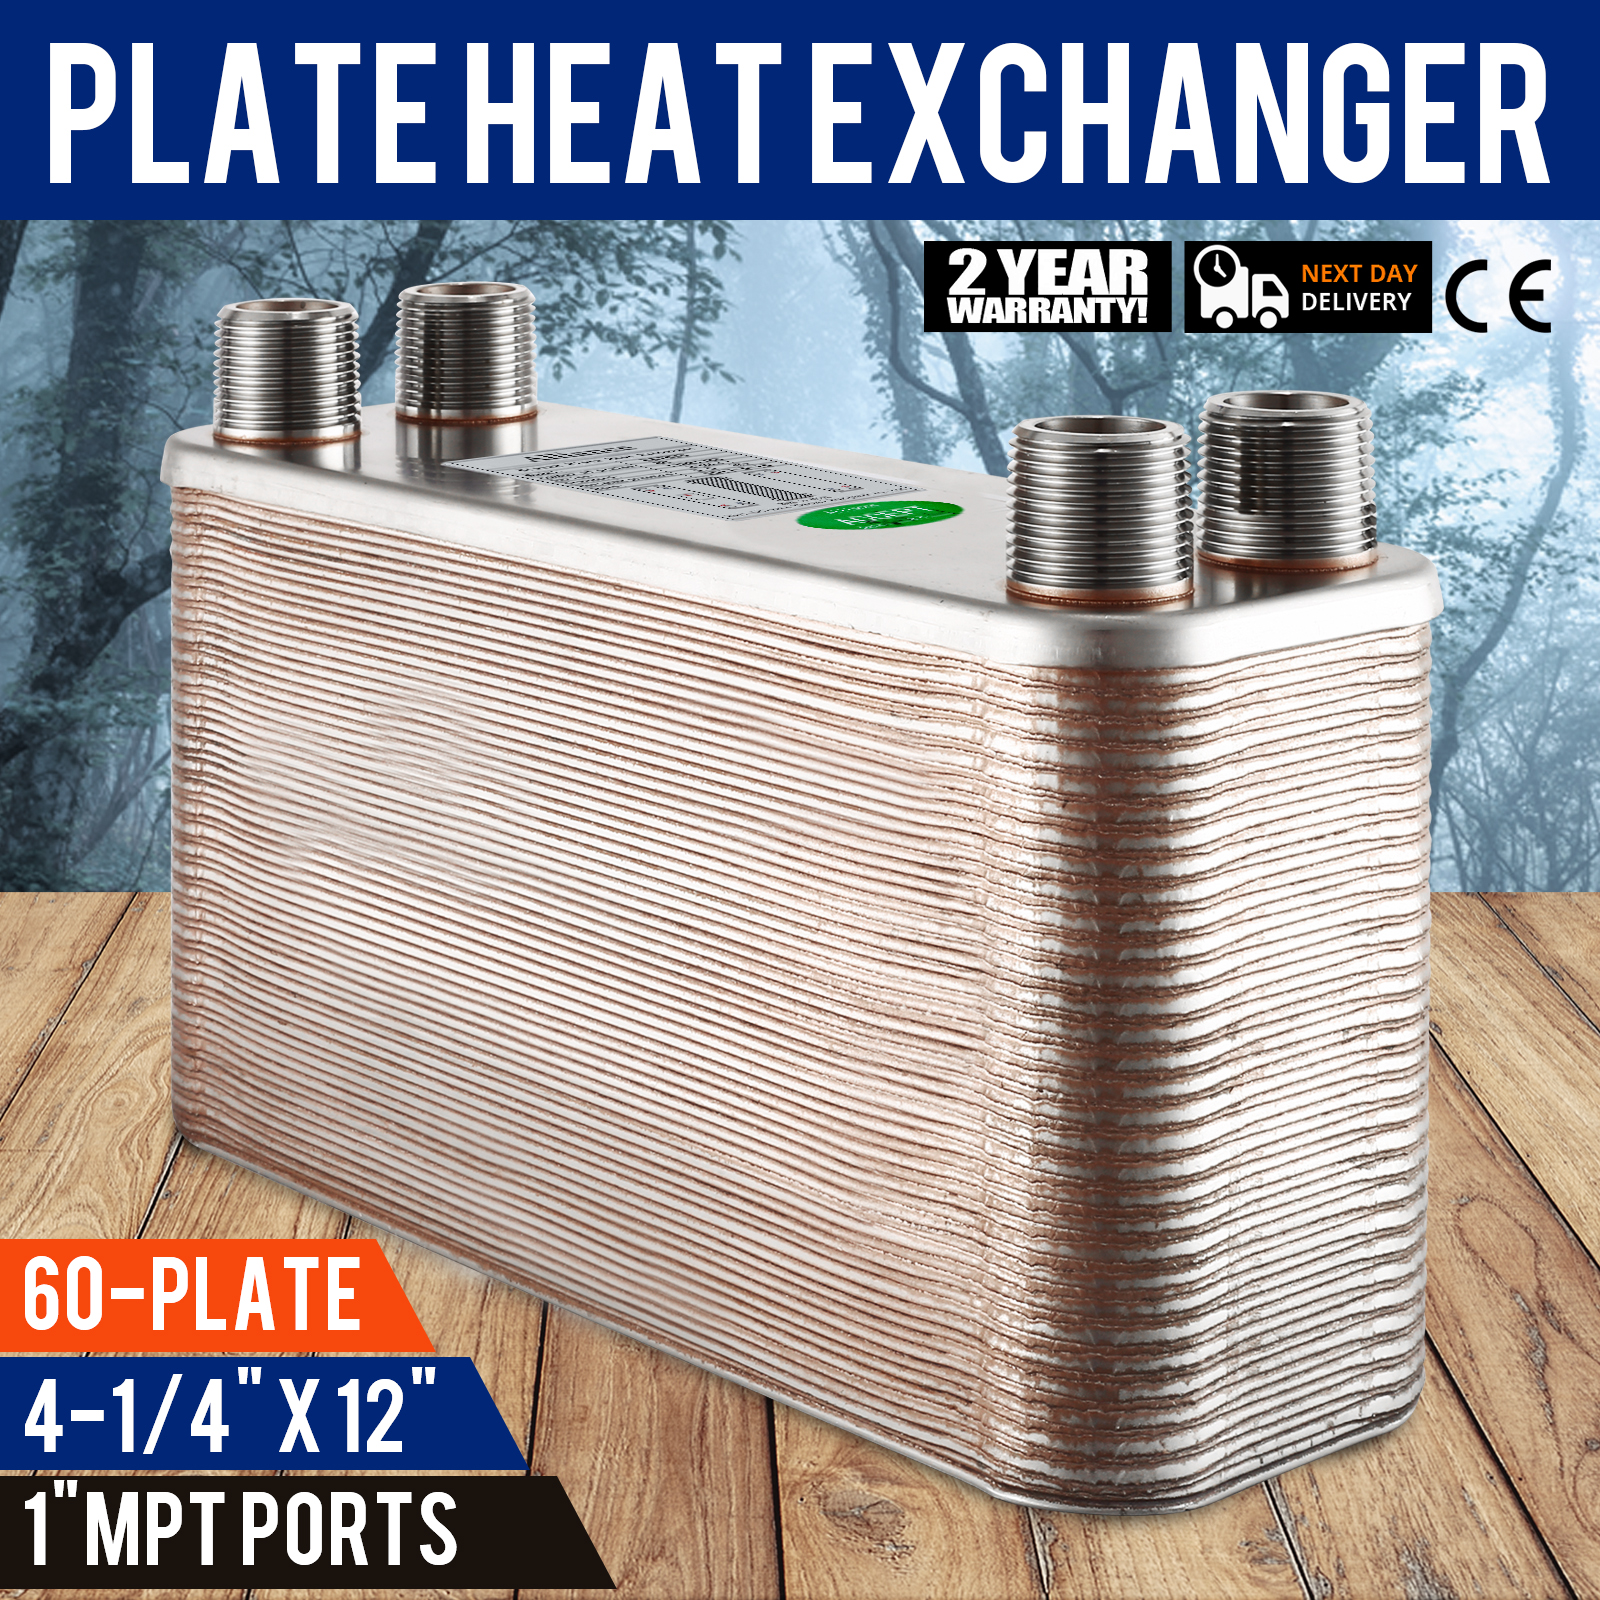 1" MPT Ports 20-Plate 4-1/4" x 12" Brazed Plate Heat Exchanger 316L St Steel 